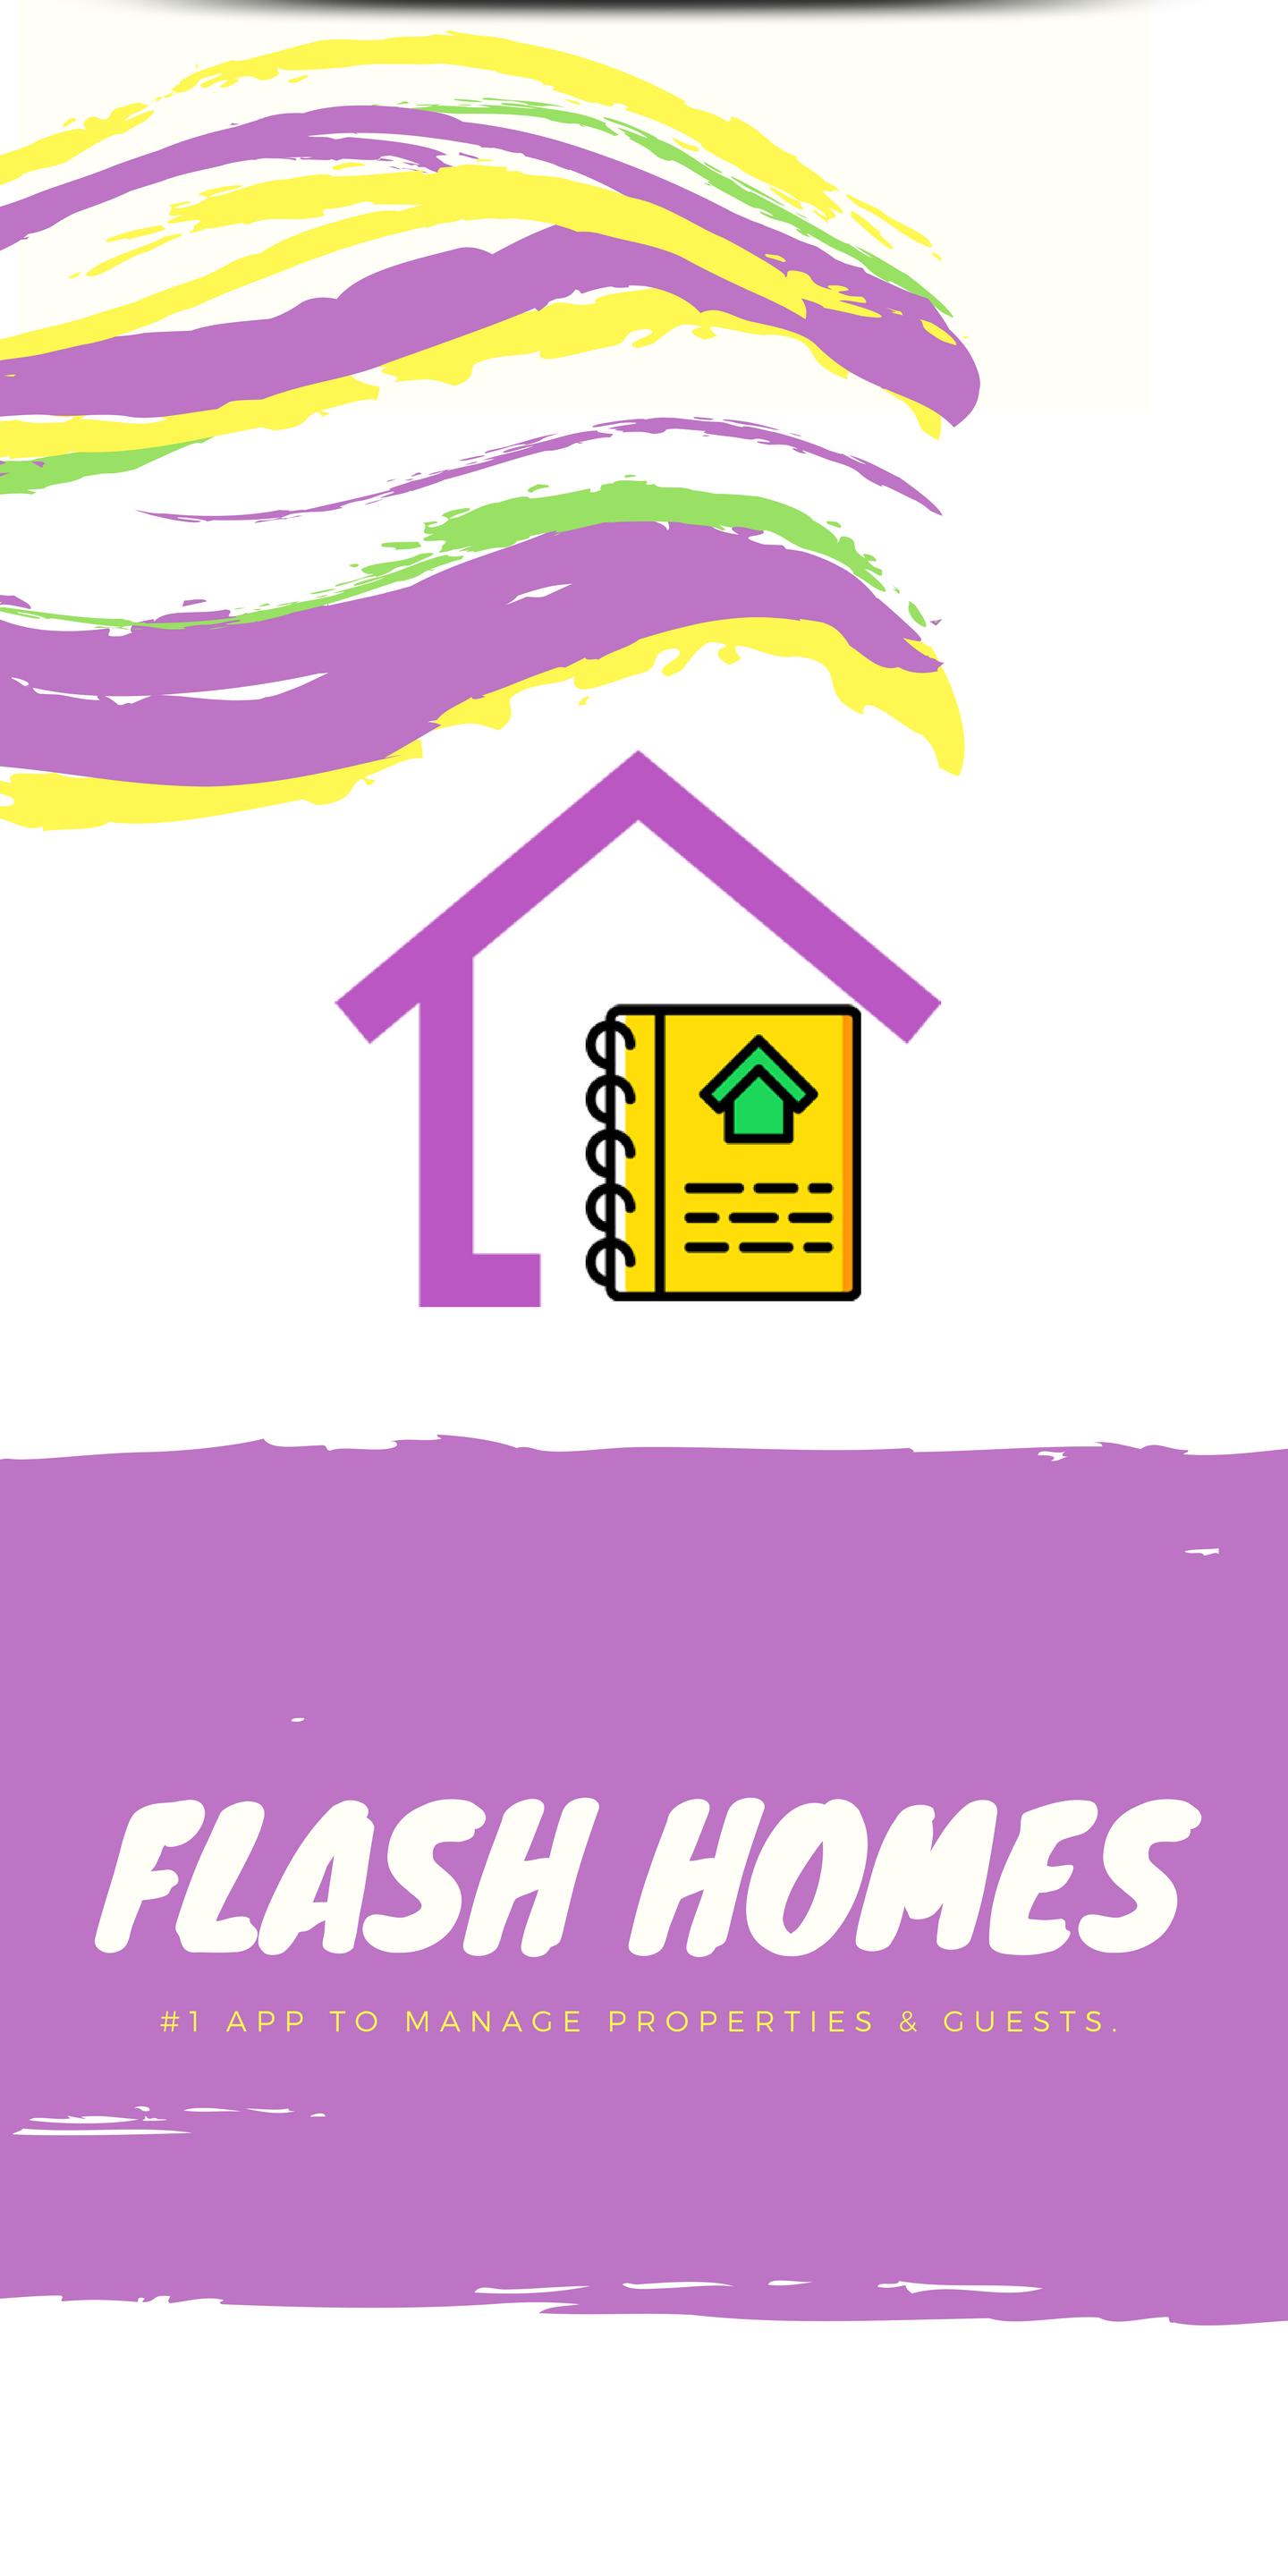 Flash home